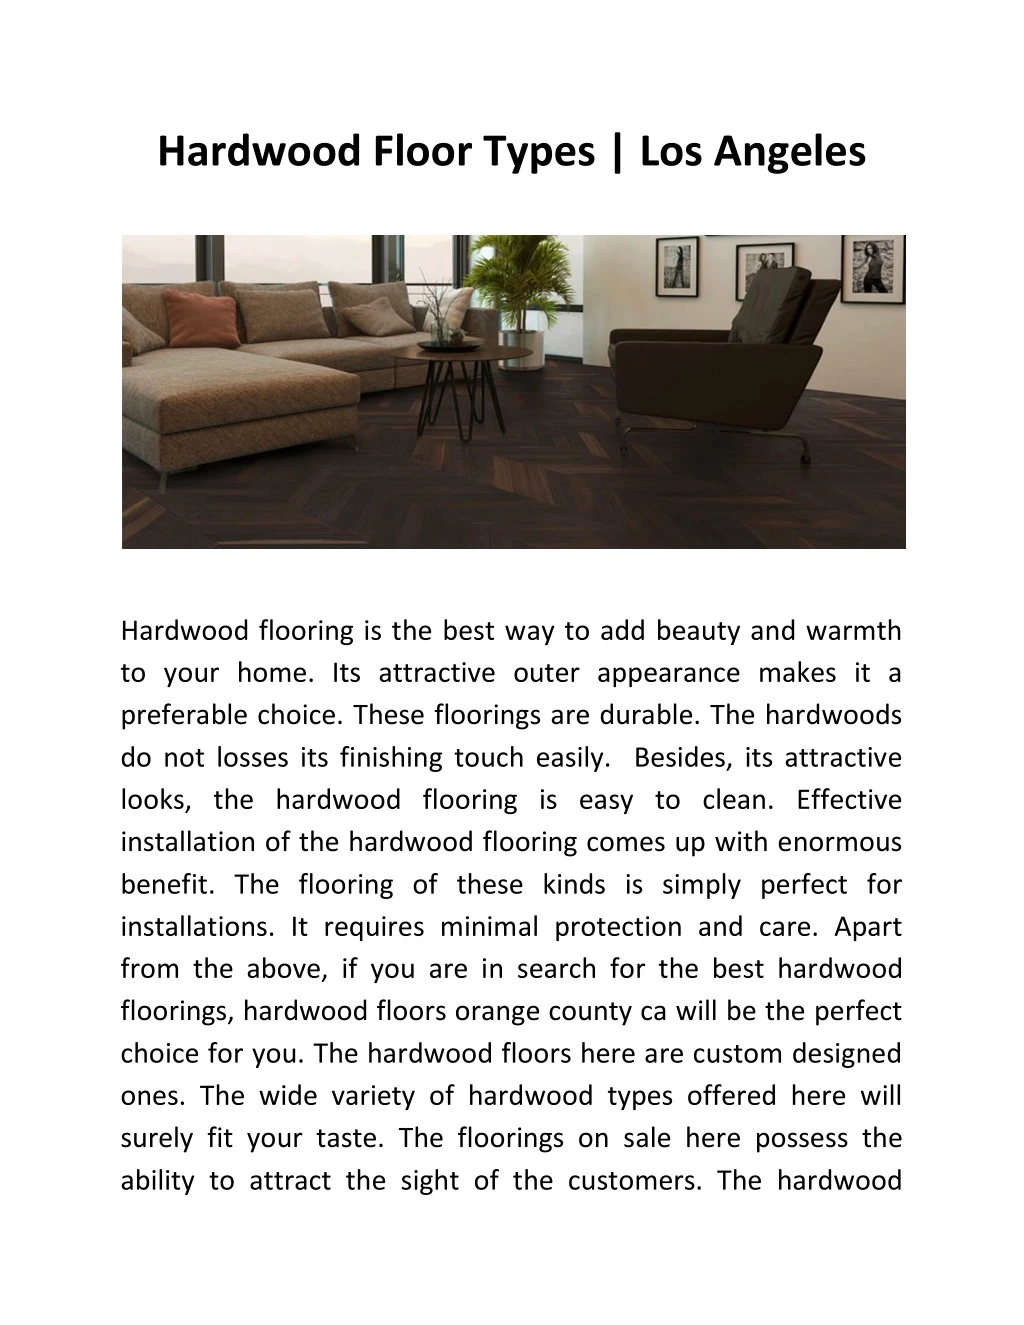 hardwood floor types los angeles